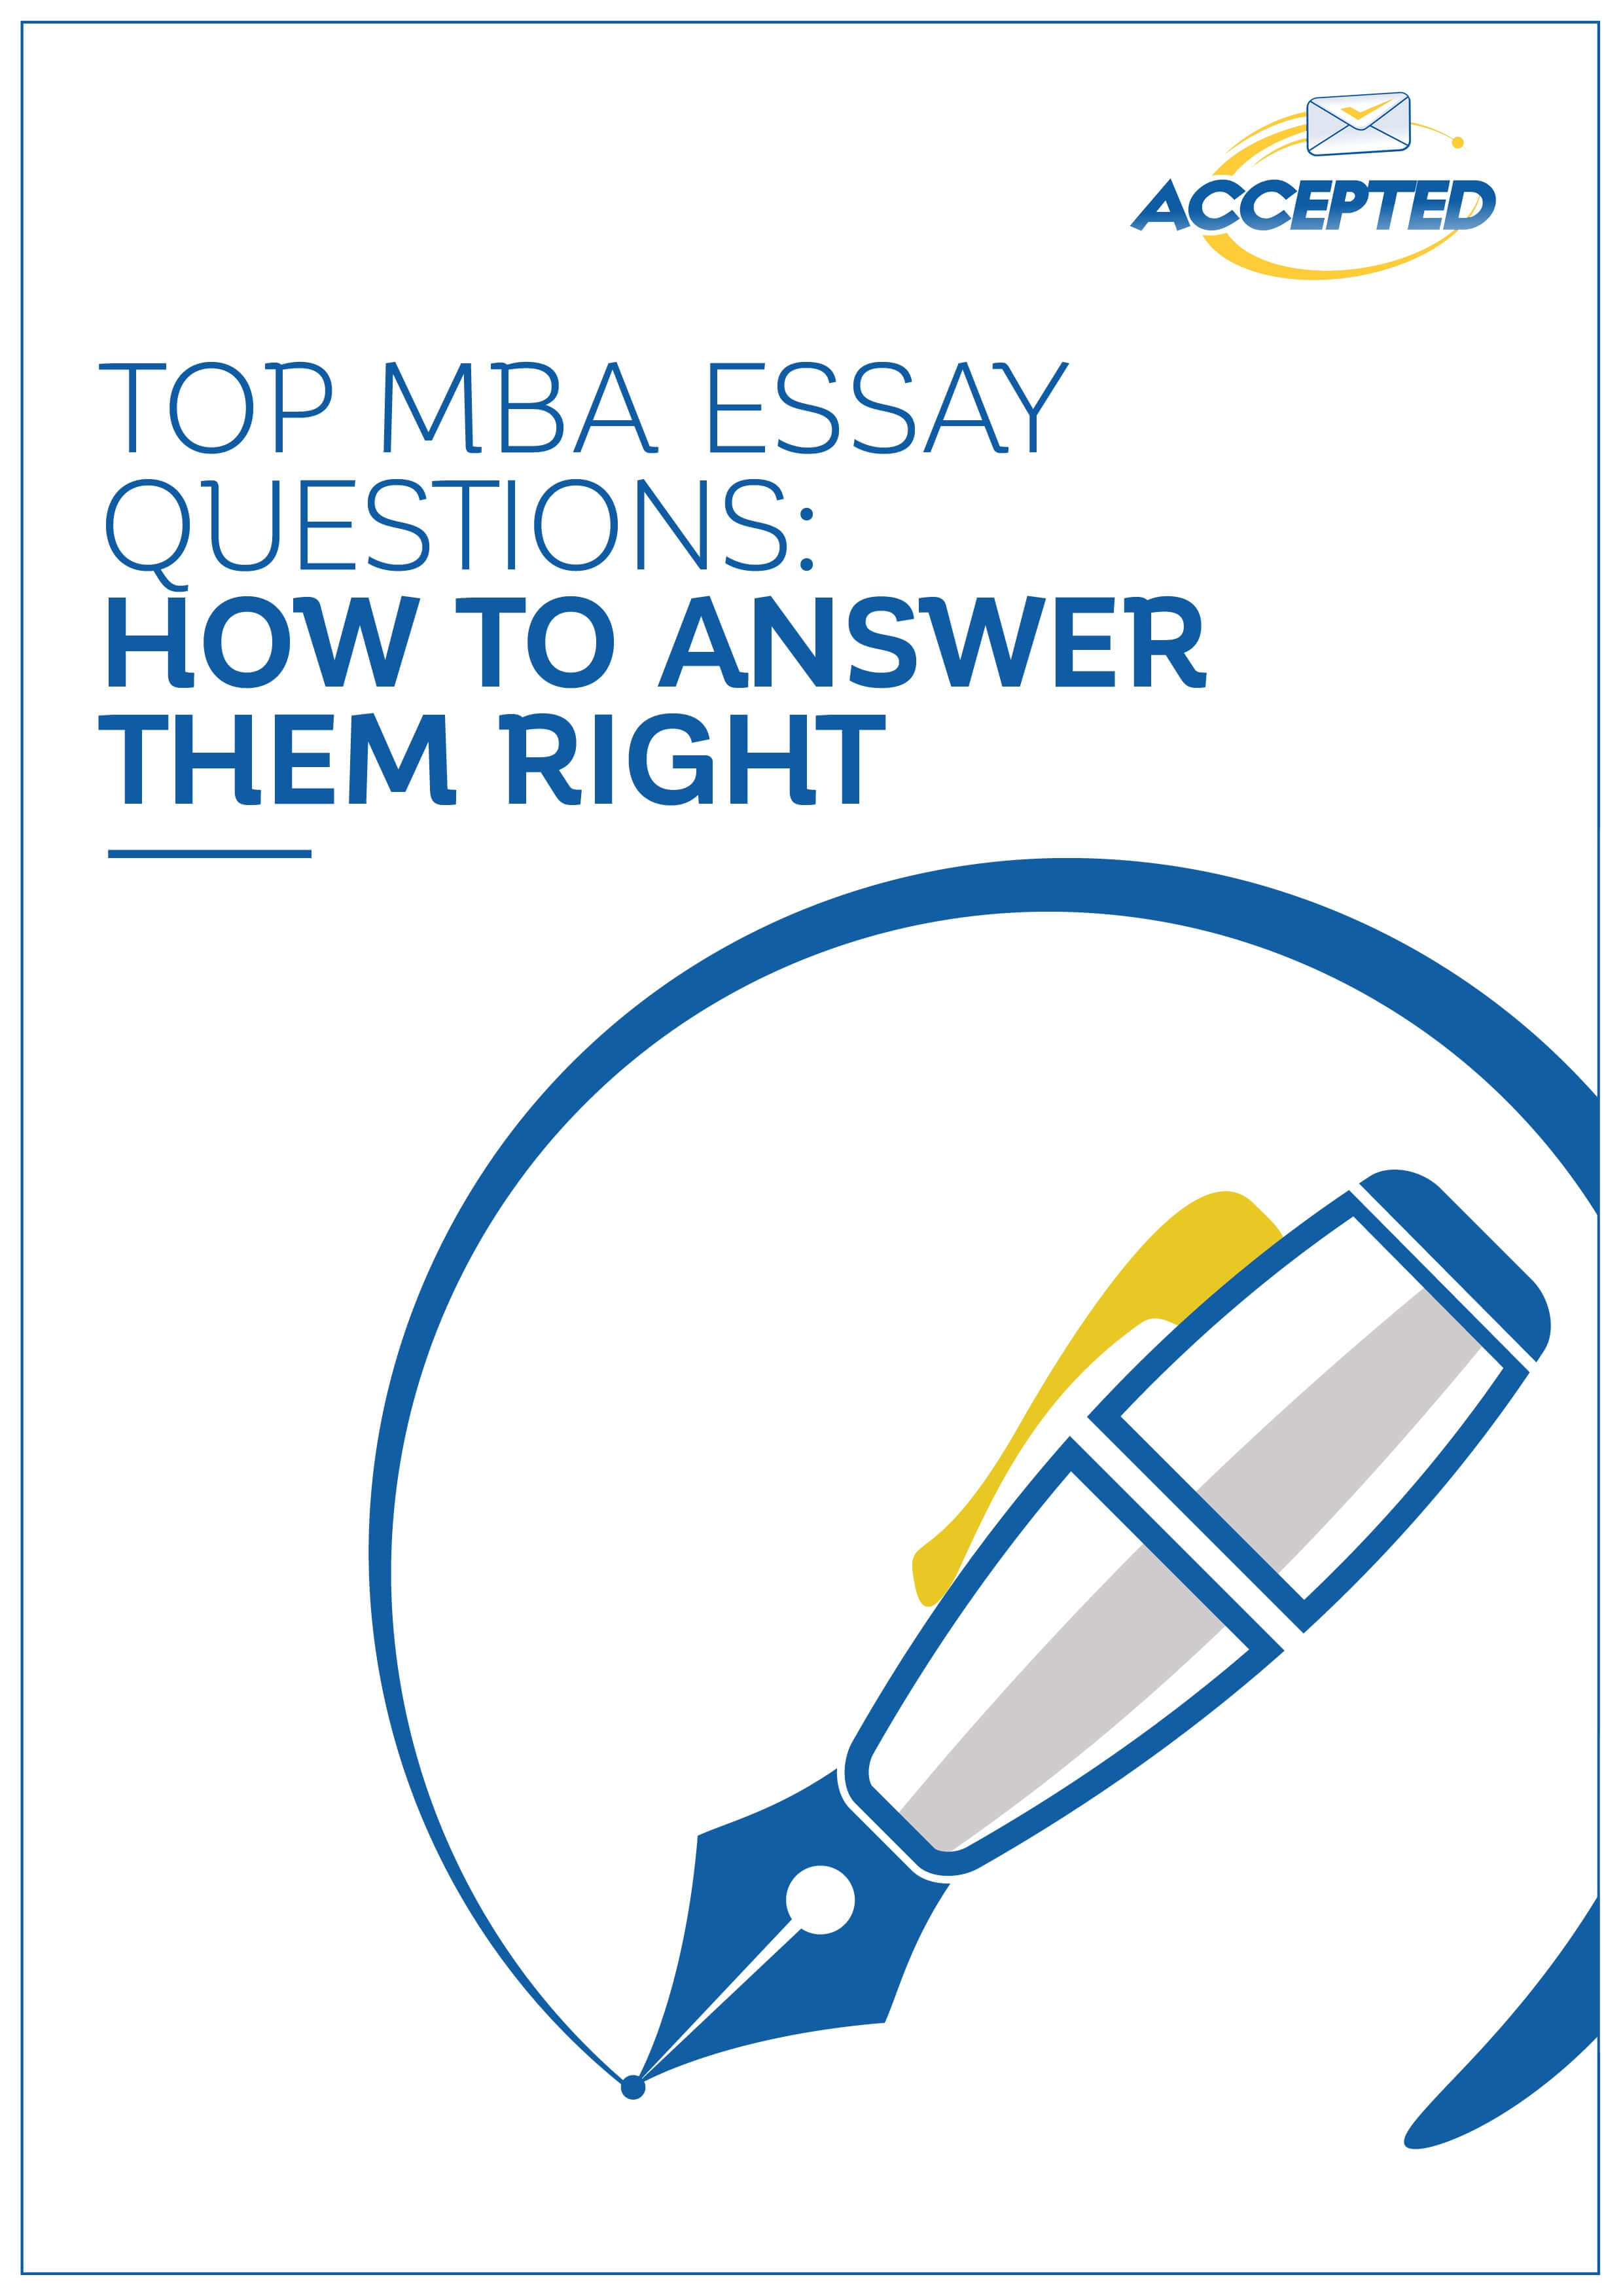 HOW TO WRITE GOOD MBA ESSAYS